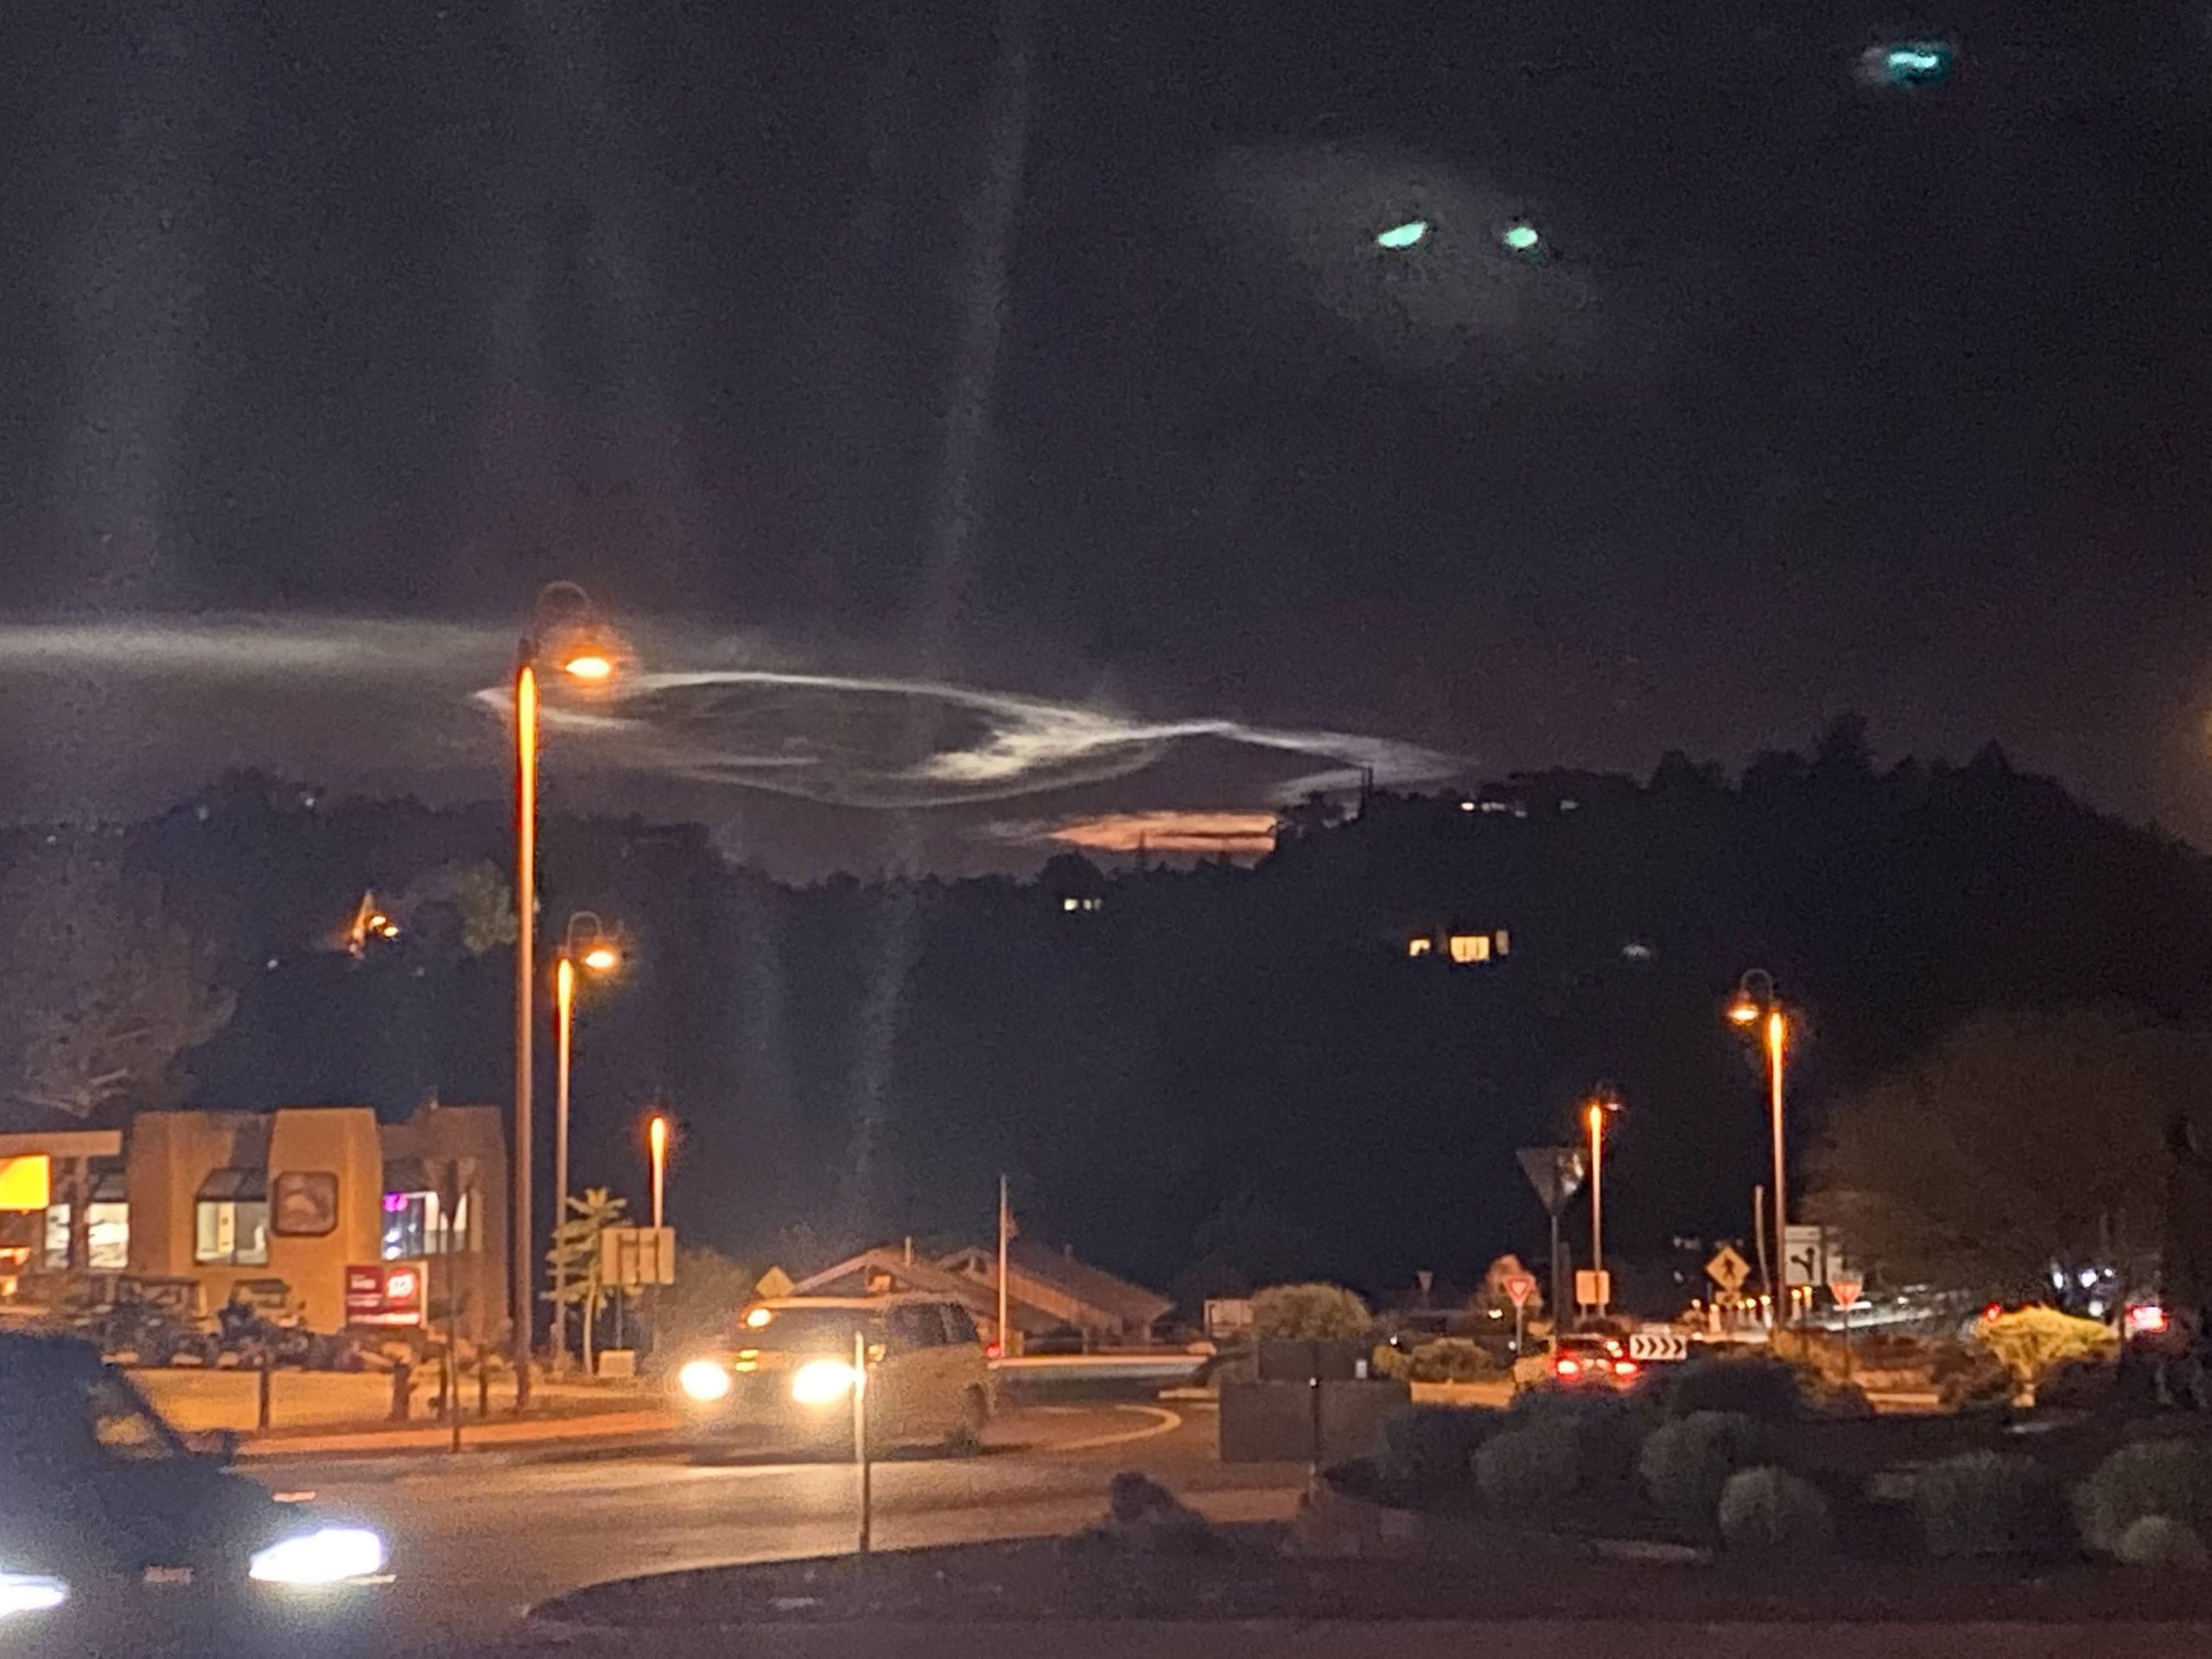 Sedona night sky showing evidenced of Space-X liftoff